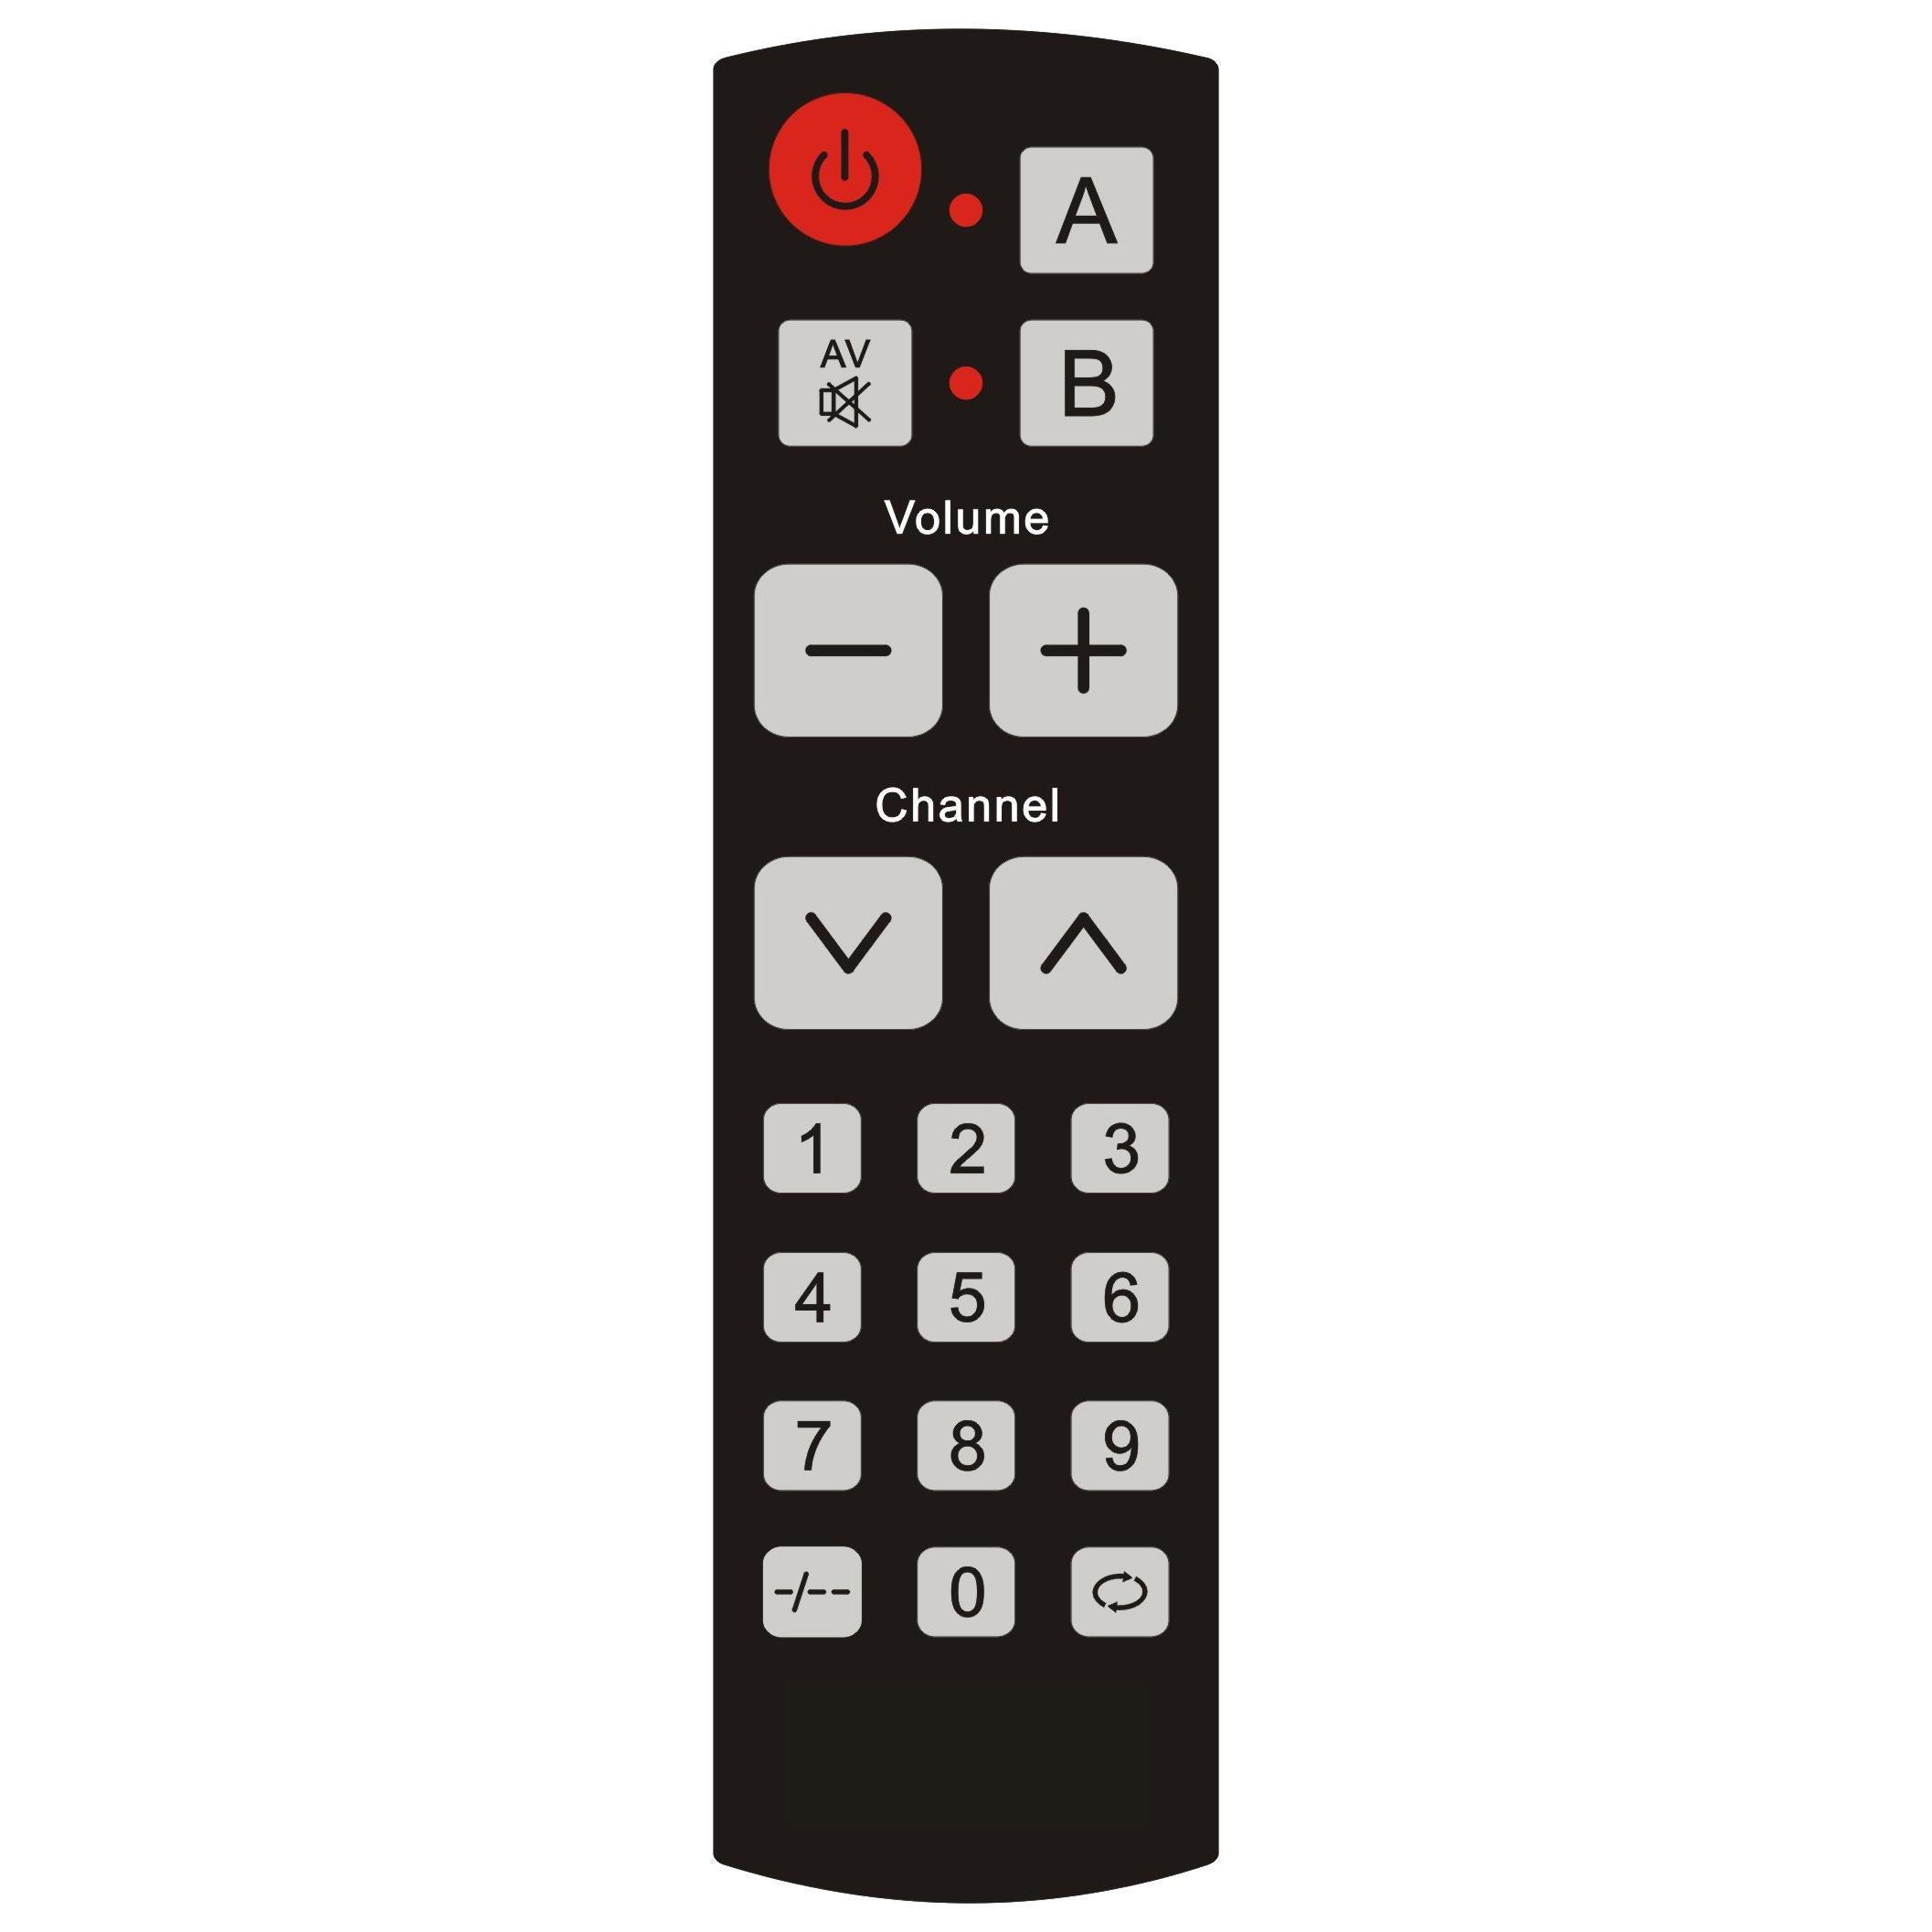 Easy-TV10 remote